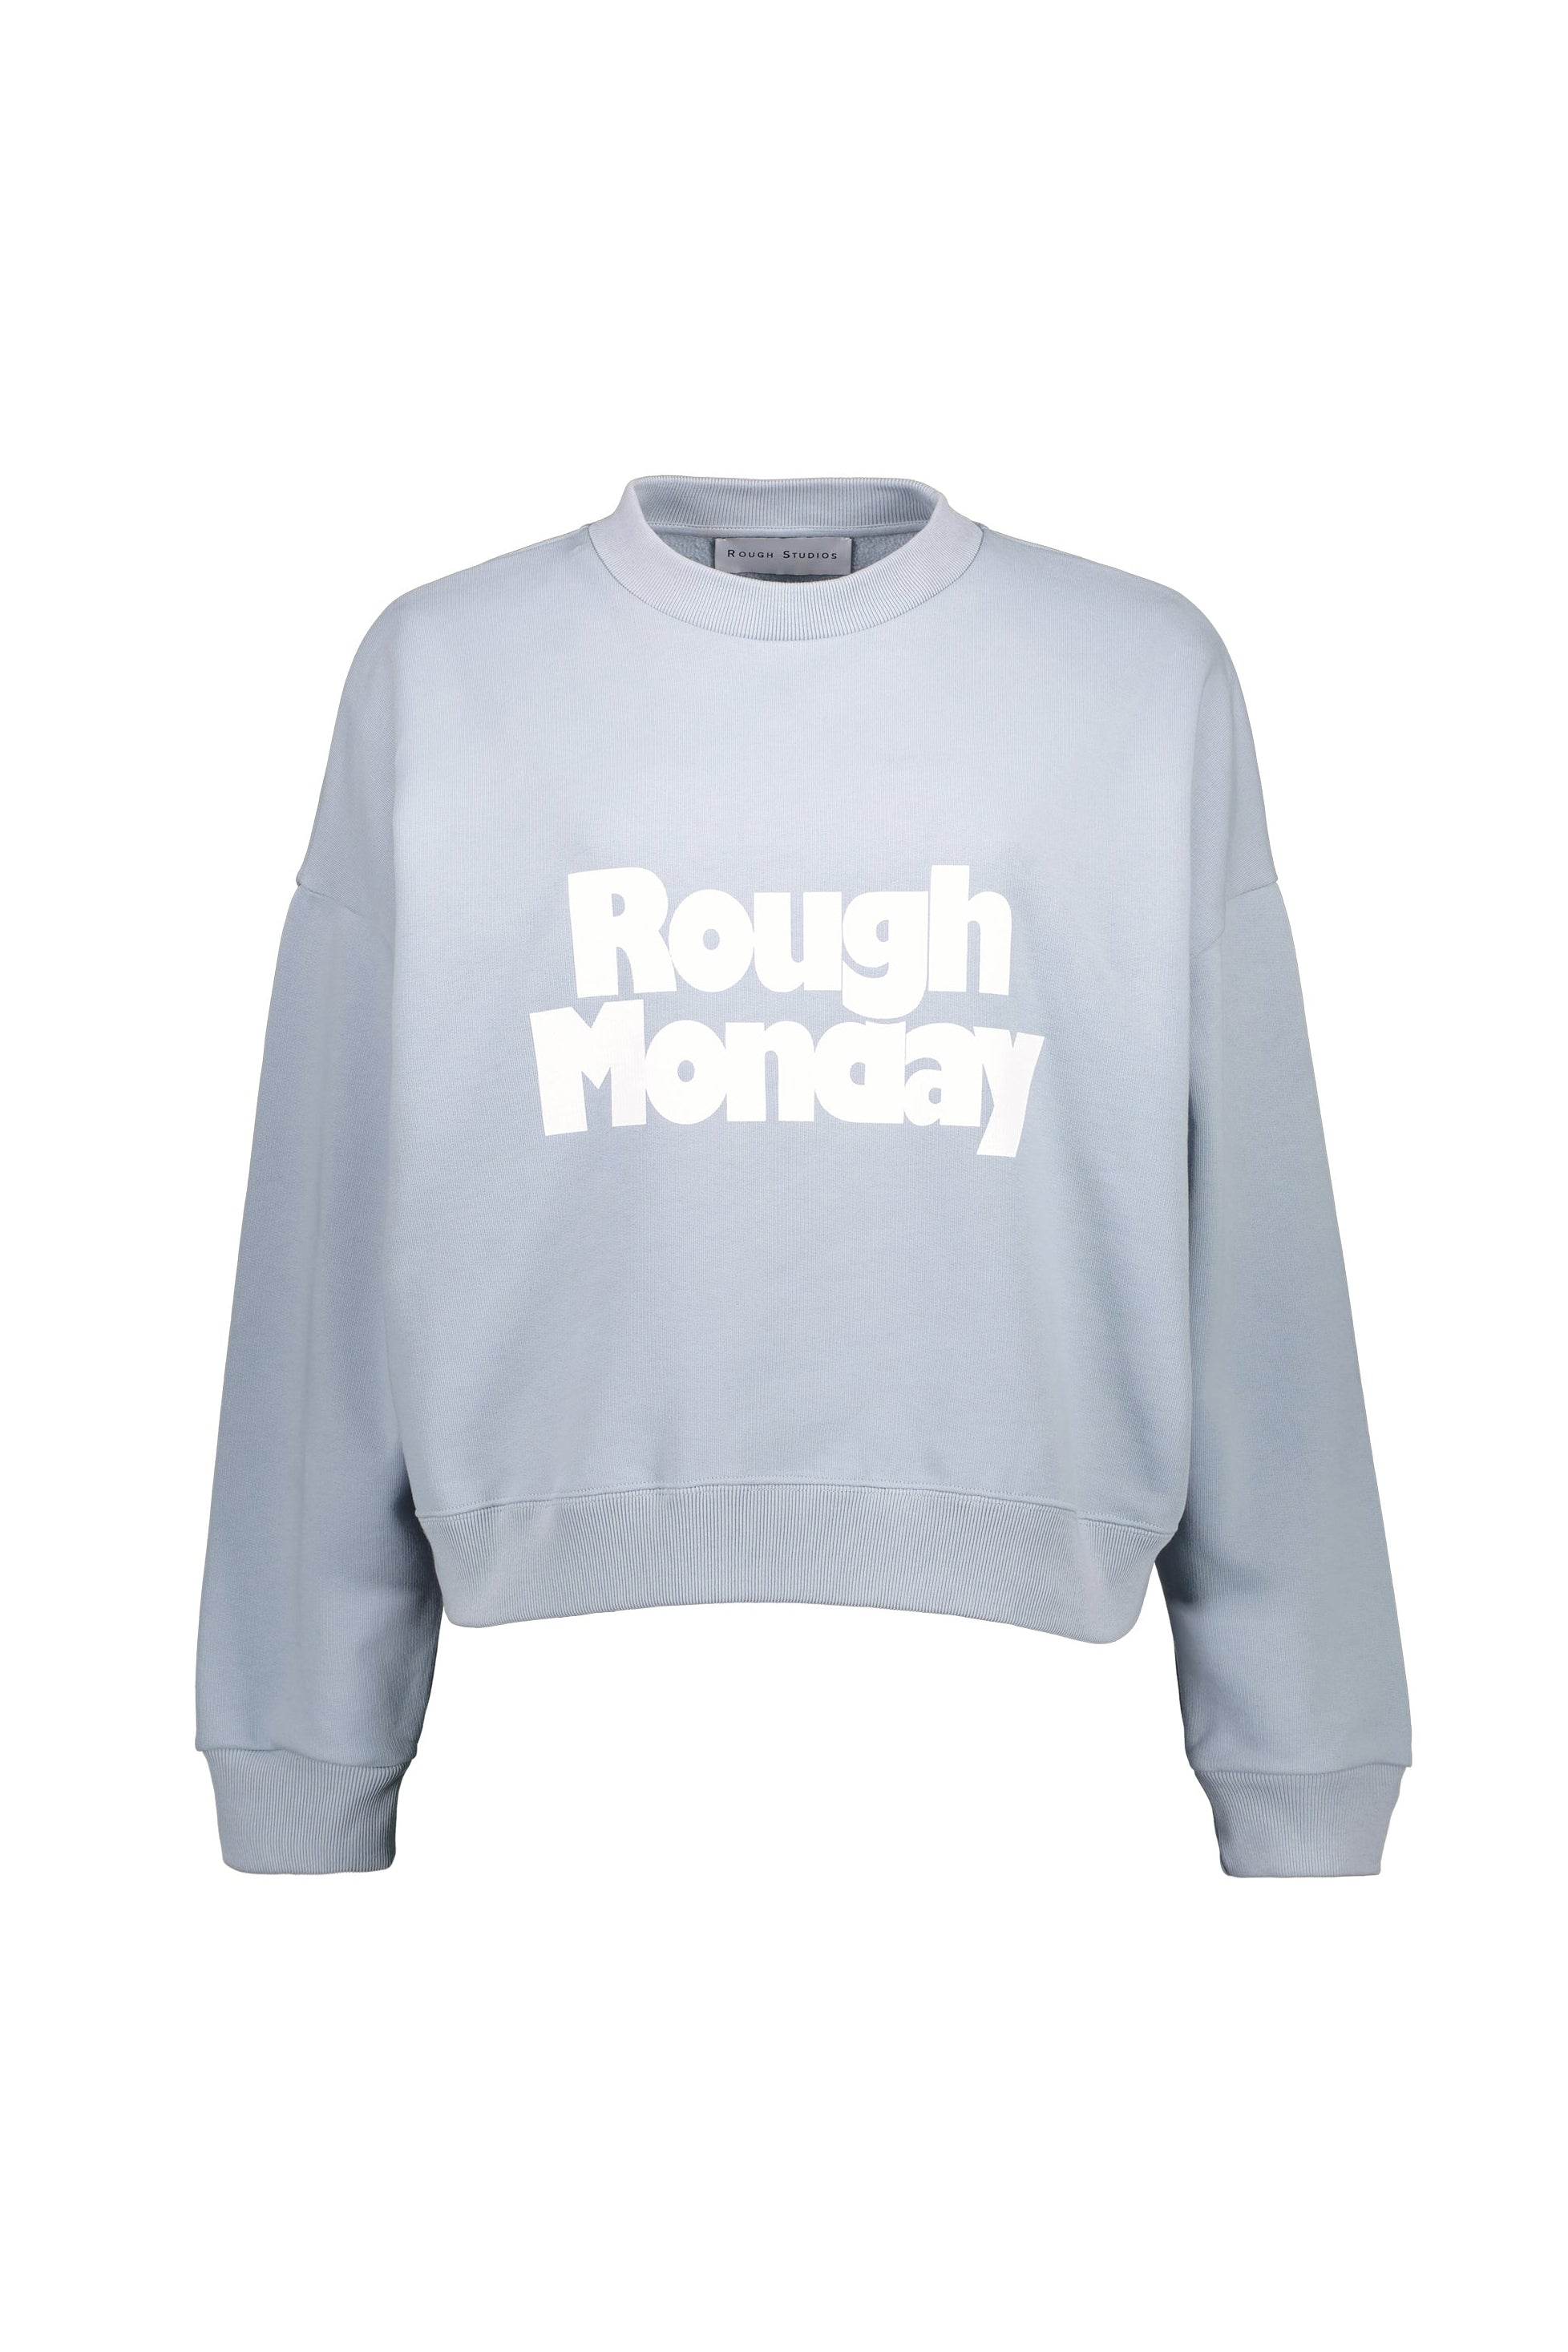 Rough Monday Sweater - Blue